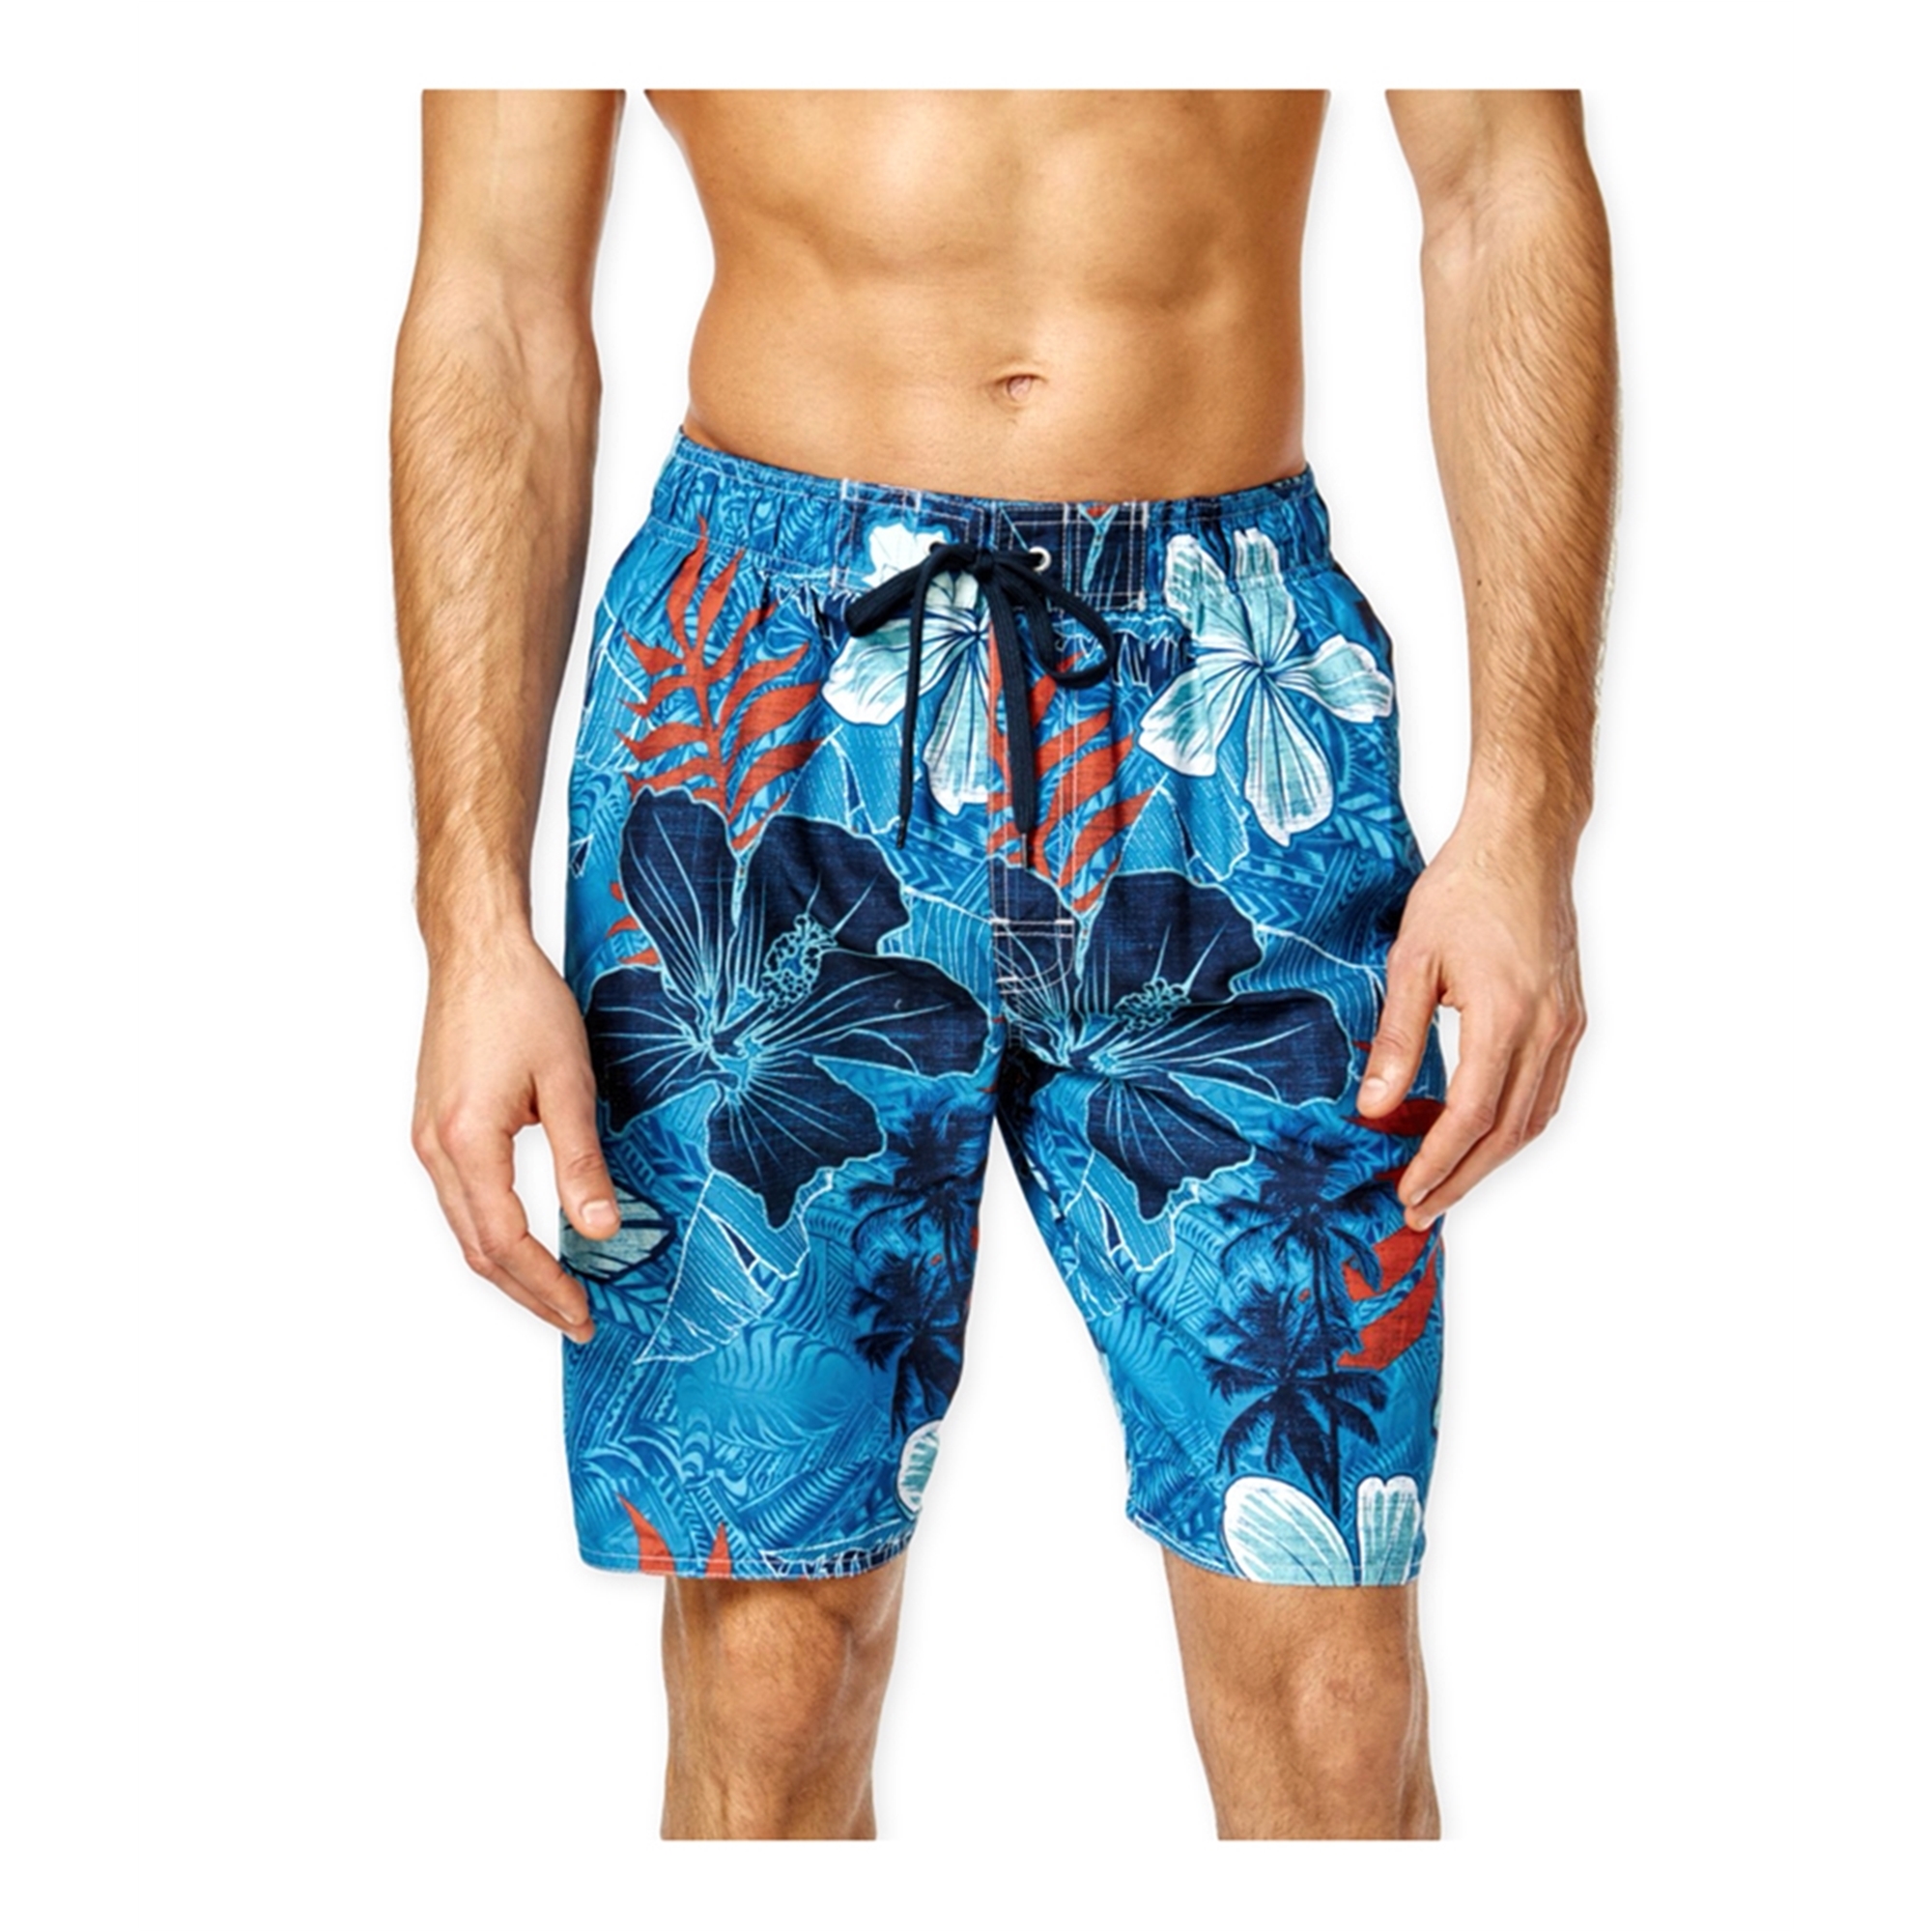 Newport Blue Mens Tribal Flower Swim Bottom Board Shorts